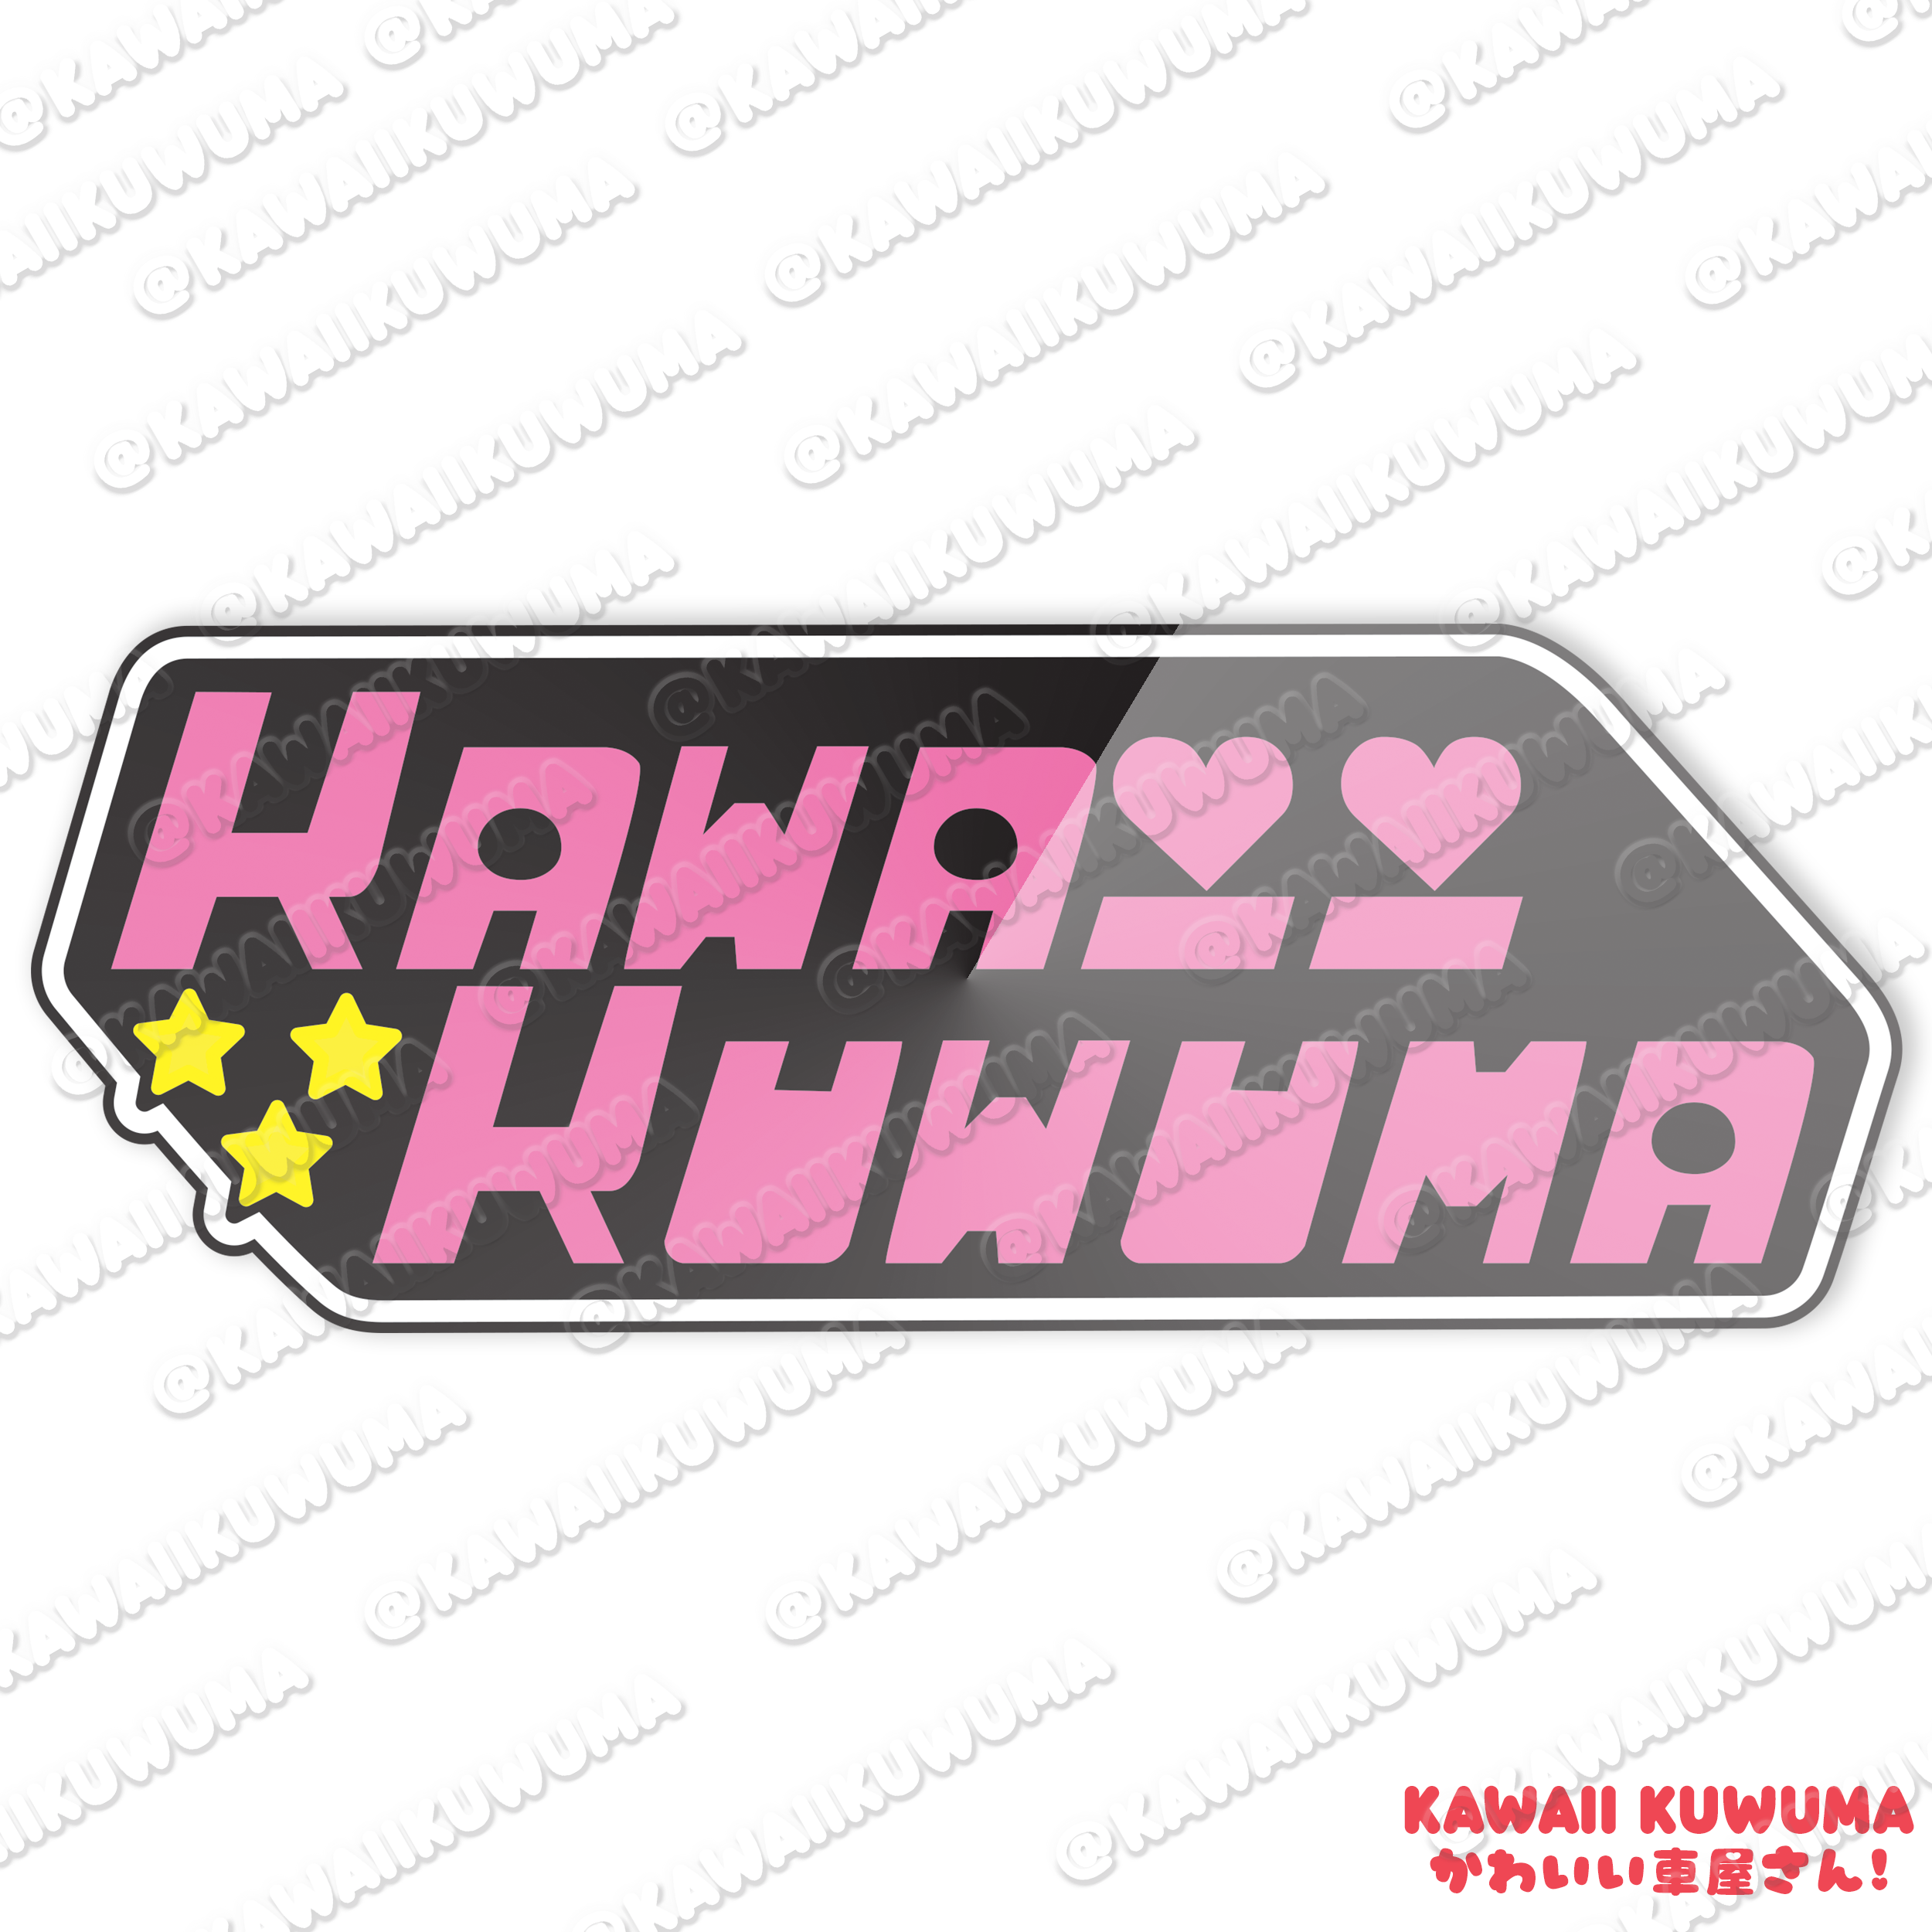 Kawaii Kuwuma PPG logo die cut